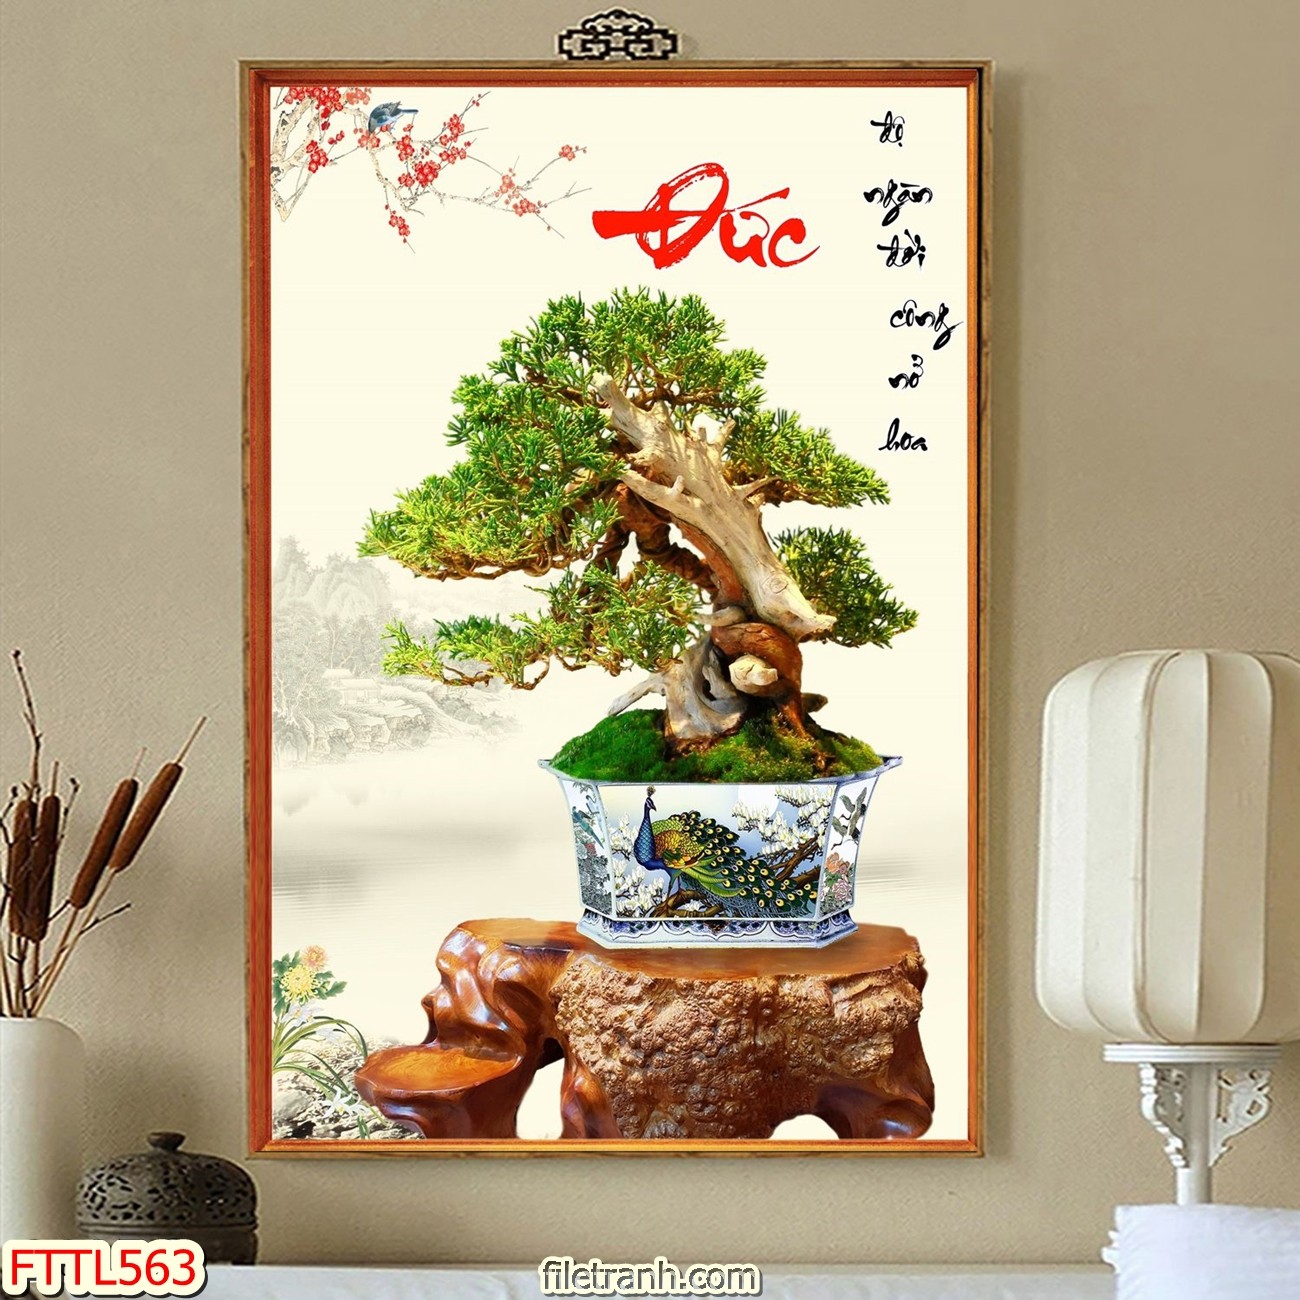 https://filetranh.com/file-tranh-chau-mai-bonsai/file-tranh-chau-mai-bonsai-fttl563.html